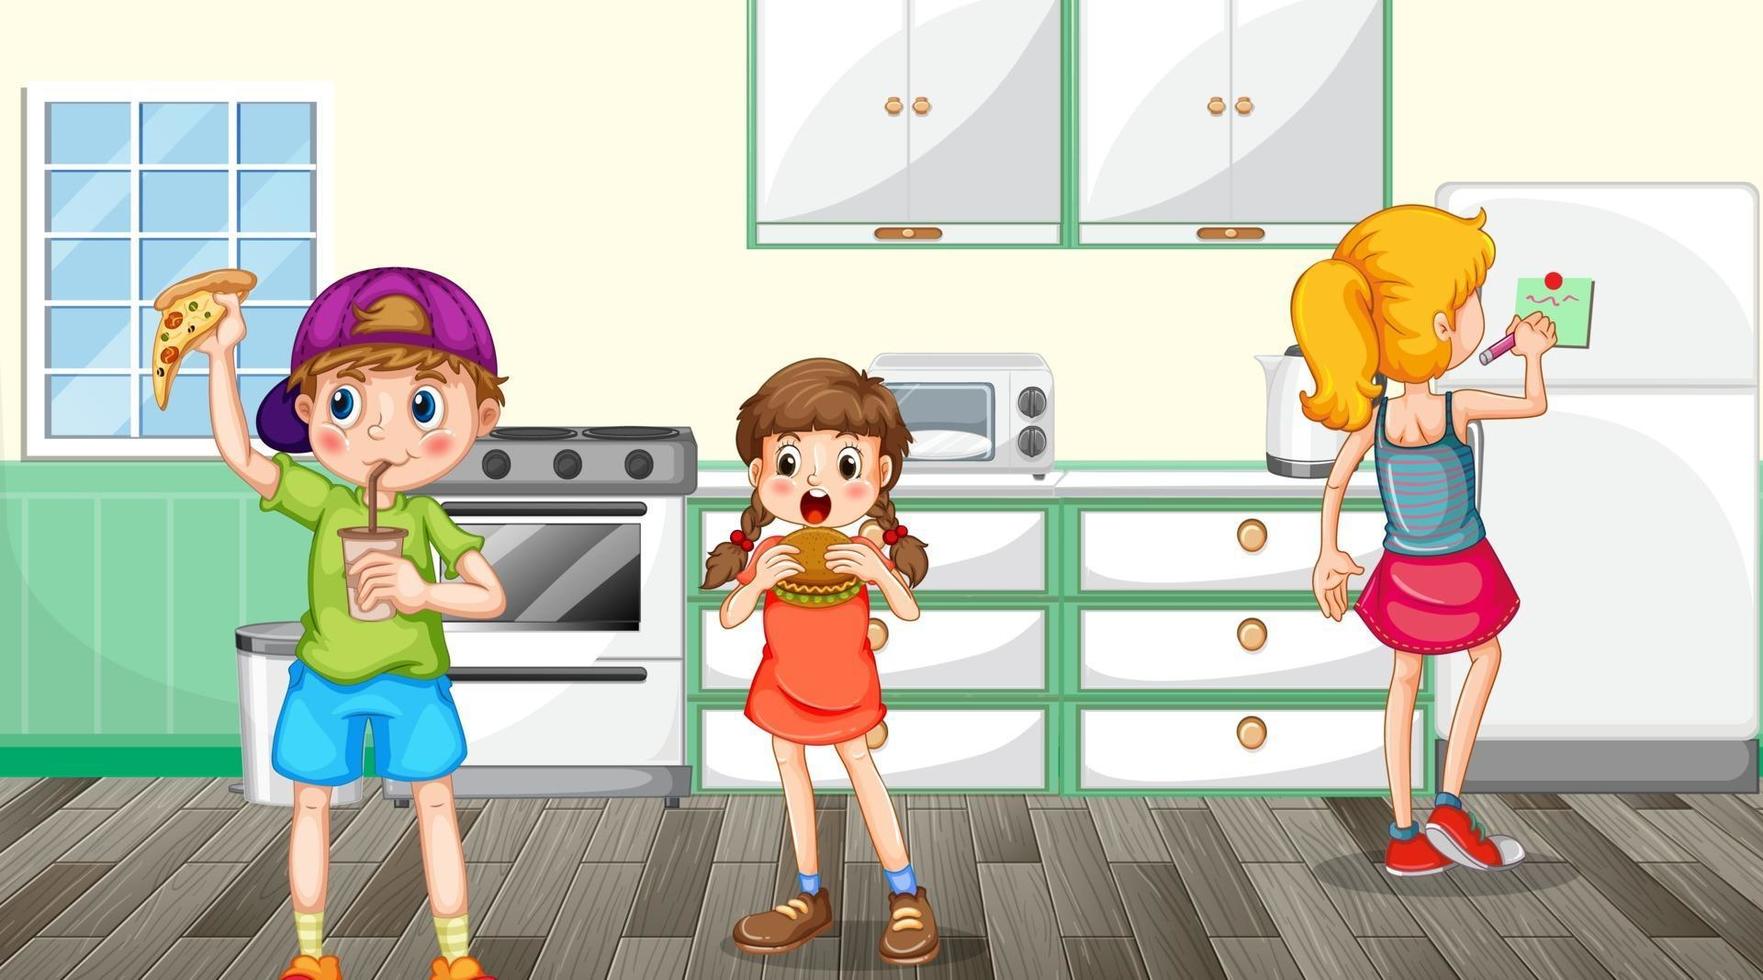 Scene with children eating in the kitchen scene vector